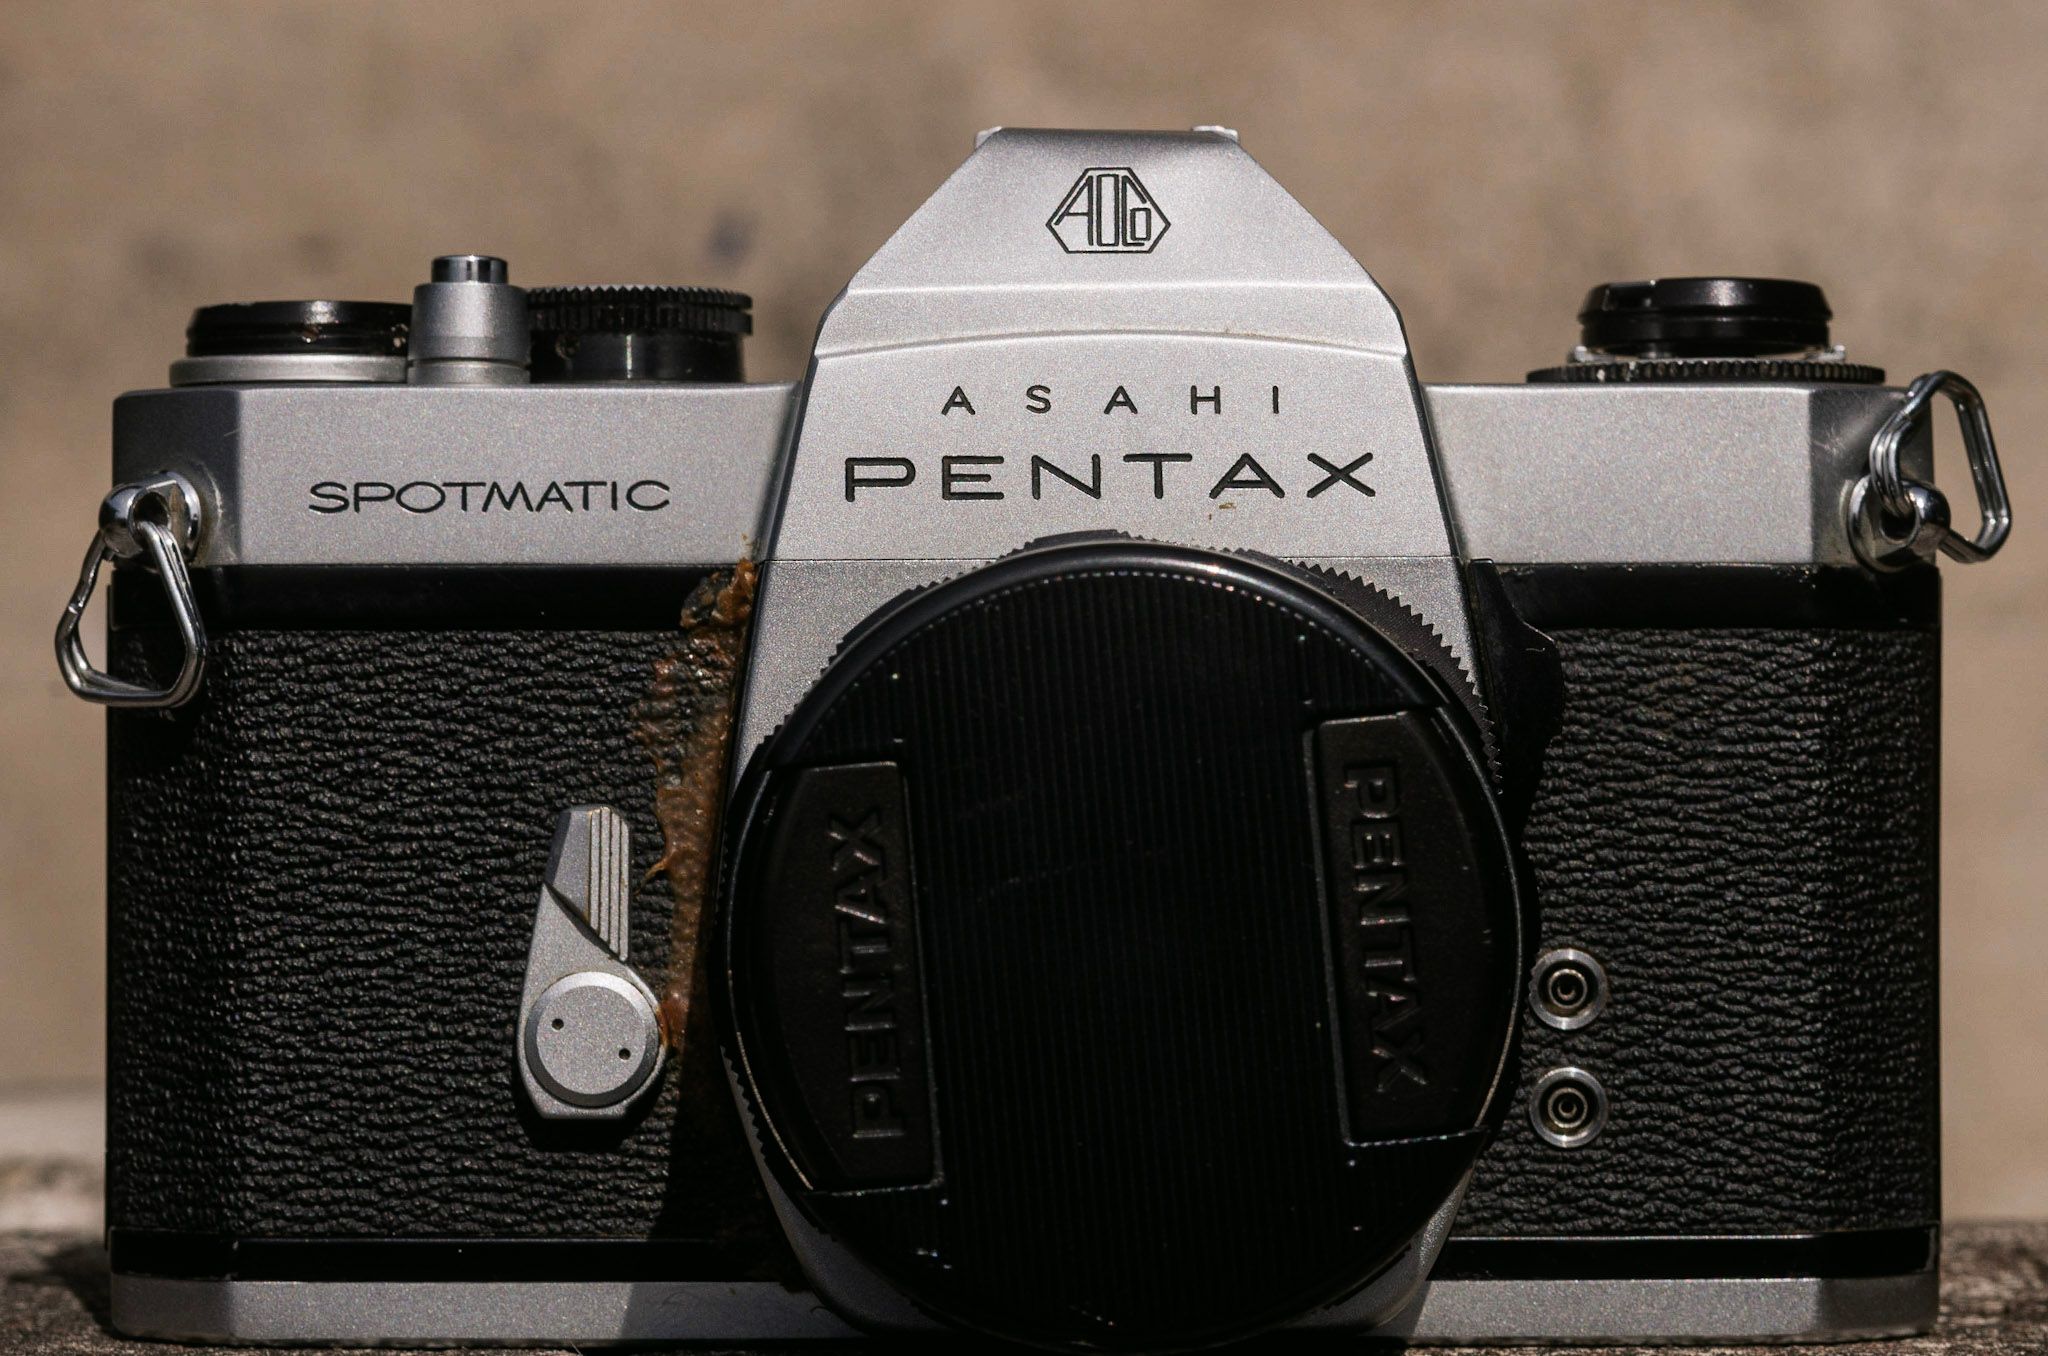 Asahi Pentax Spotmatic SPII Film Camera Review - 50mmF2